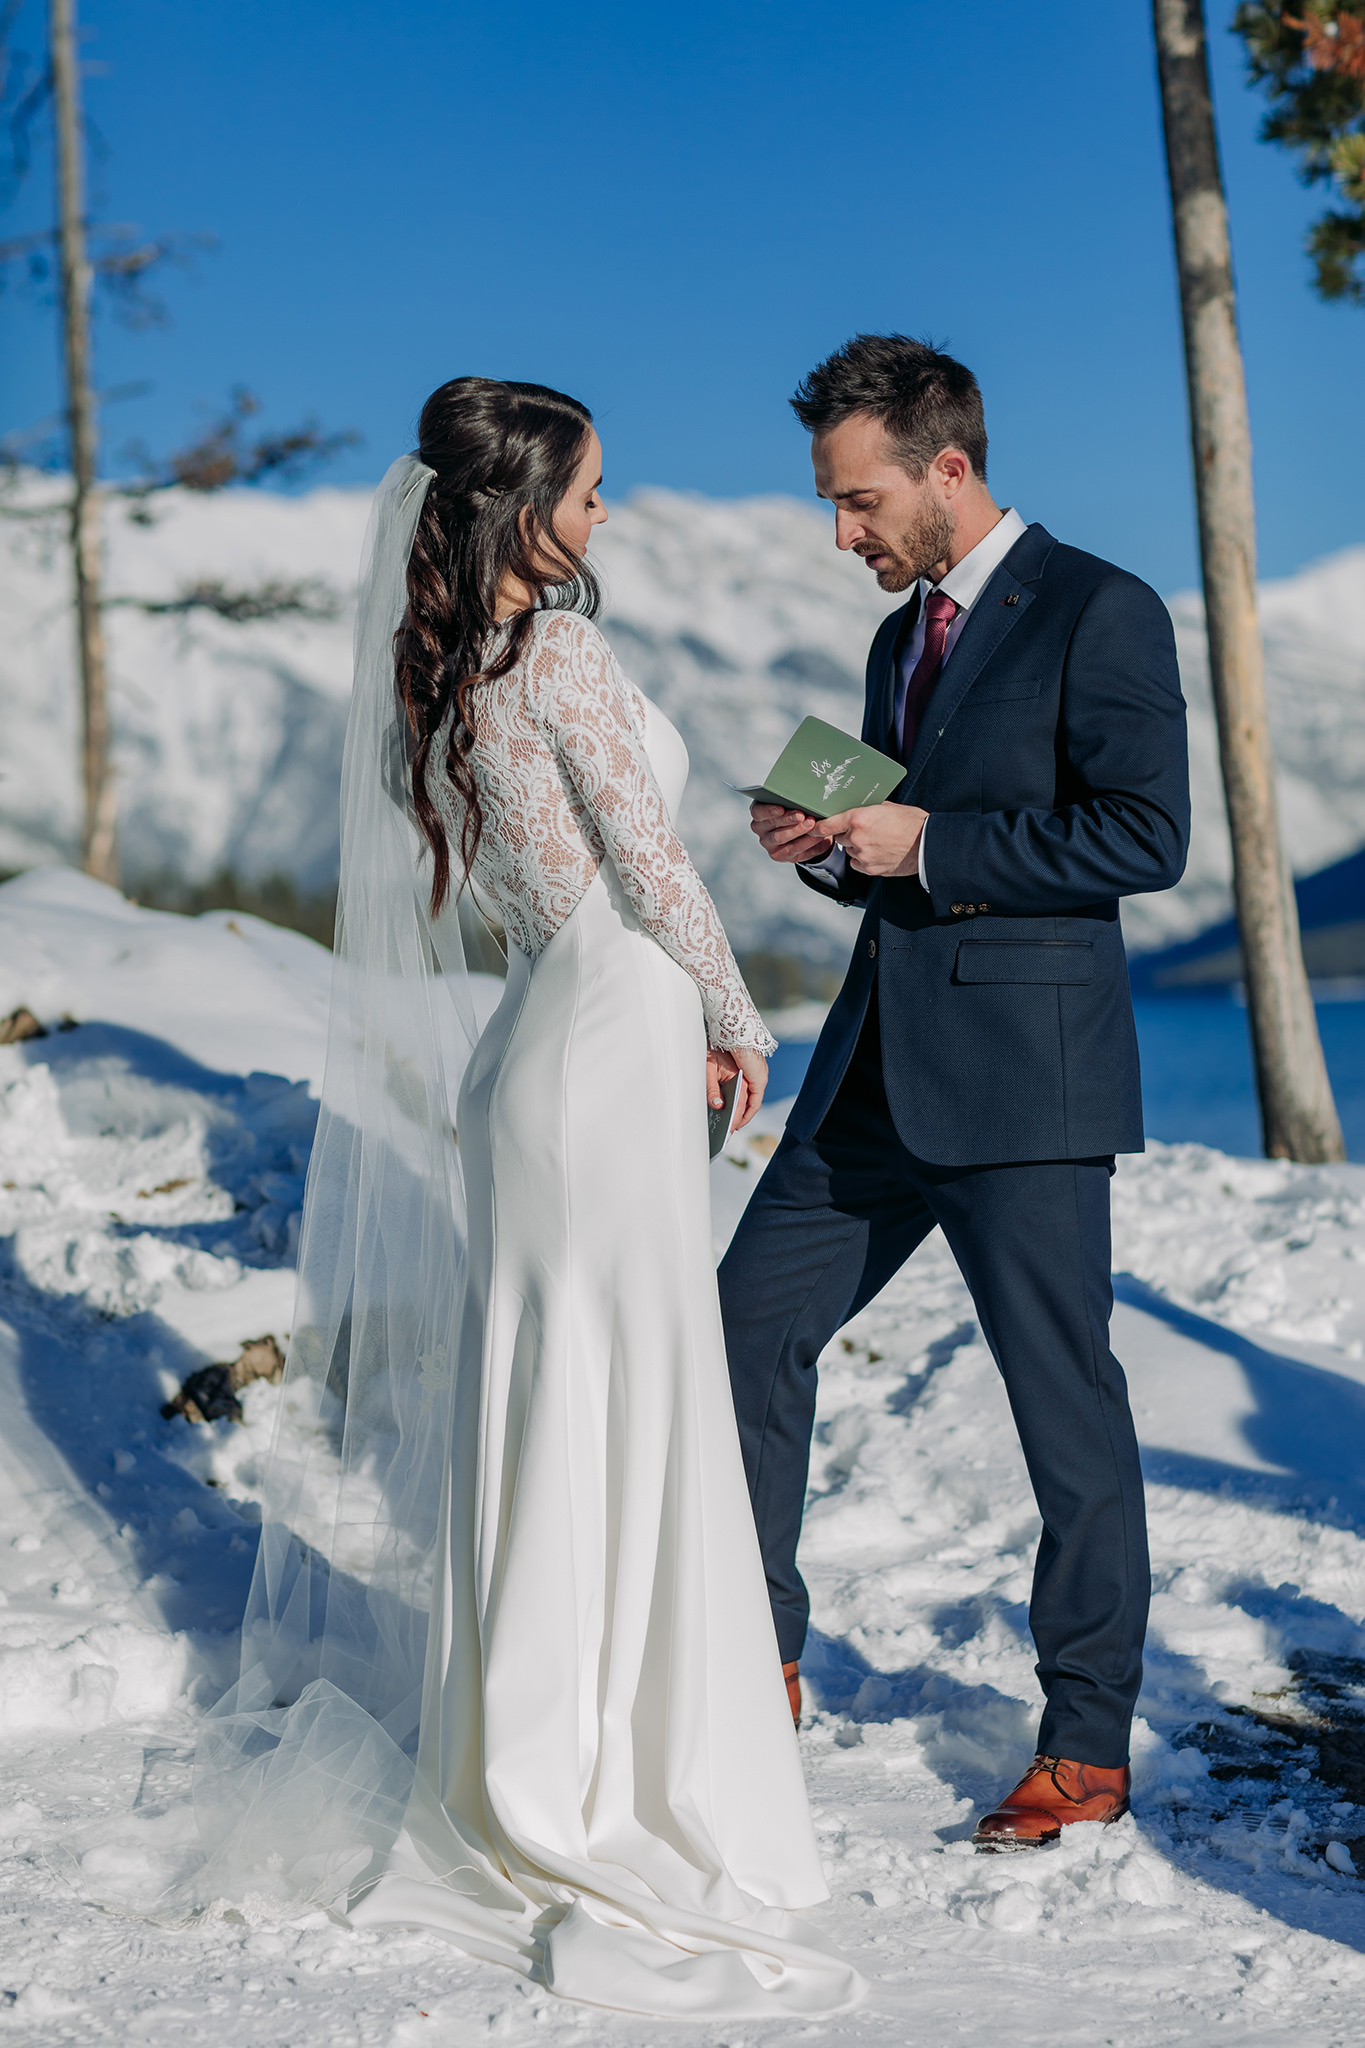 Lake Minnewanka Winter wedding in Banff with outdoor ceremony